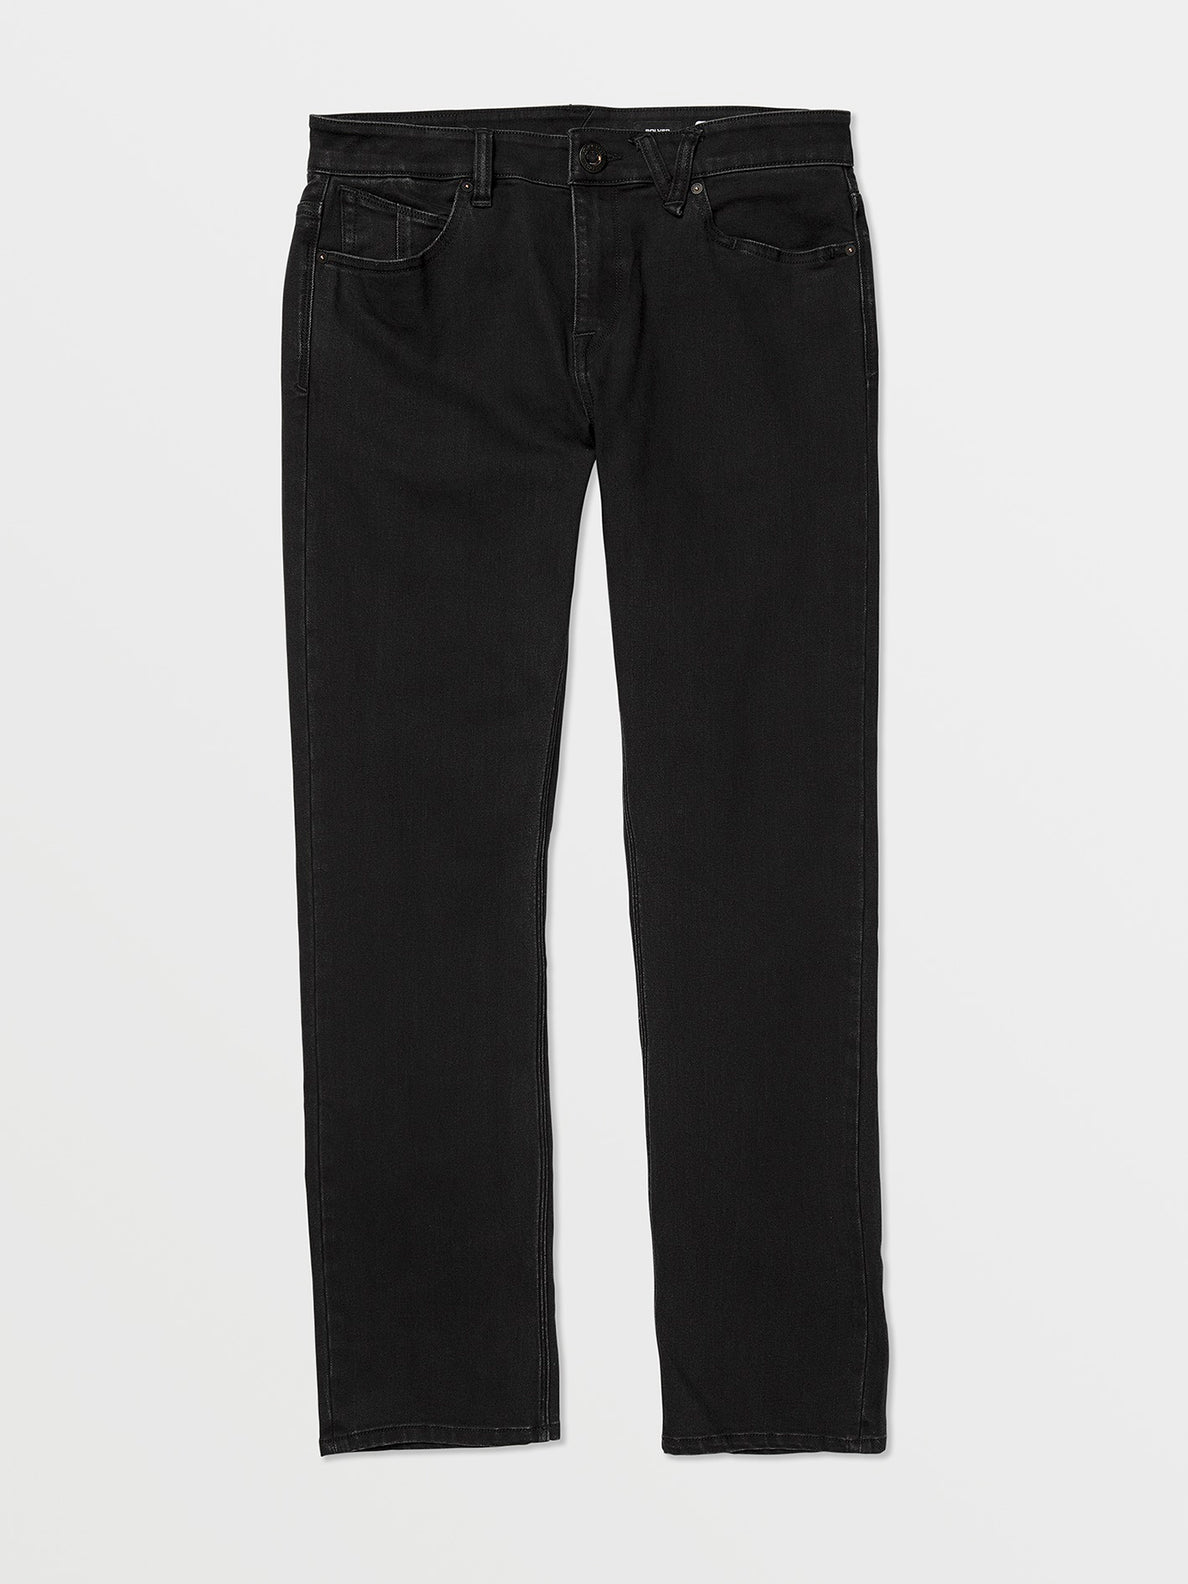 New Basic Editions Black stretch denim jeans pants choose size 4, 6